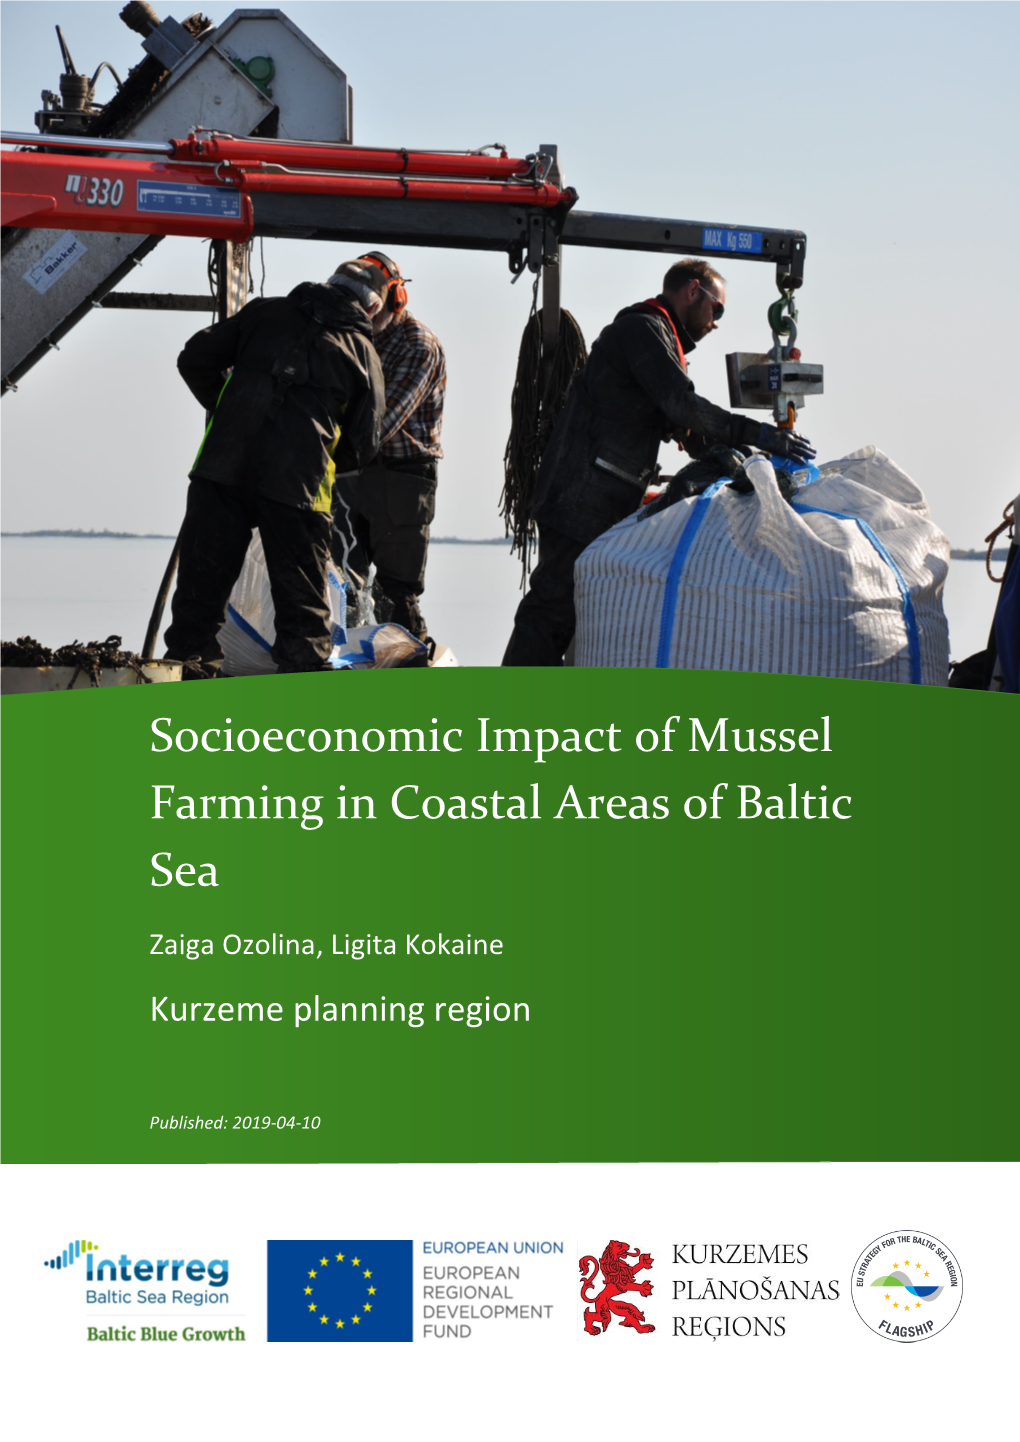 Socioeconomic Impact of Mussel Farming in Coastal Areas of Baltic Sea